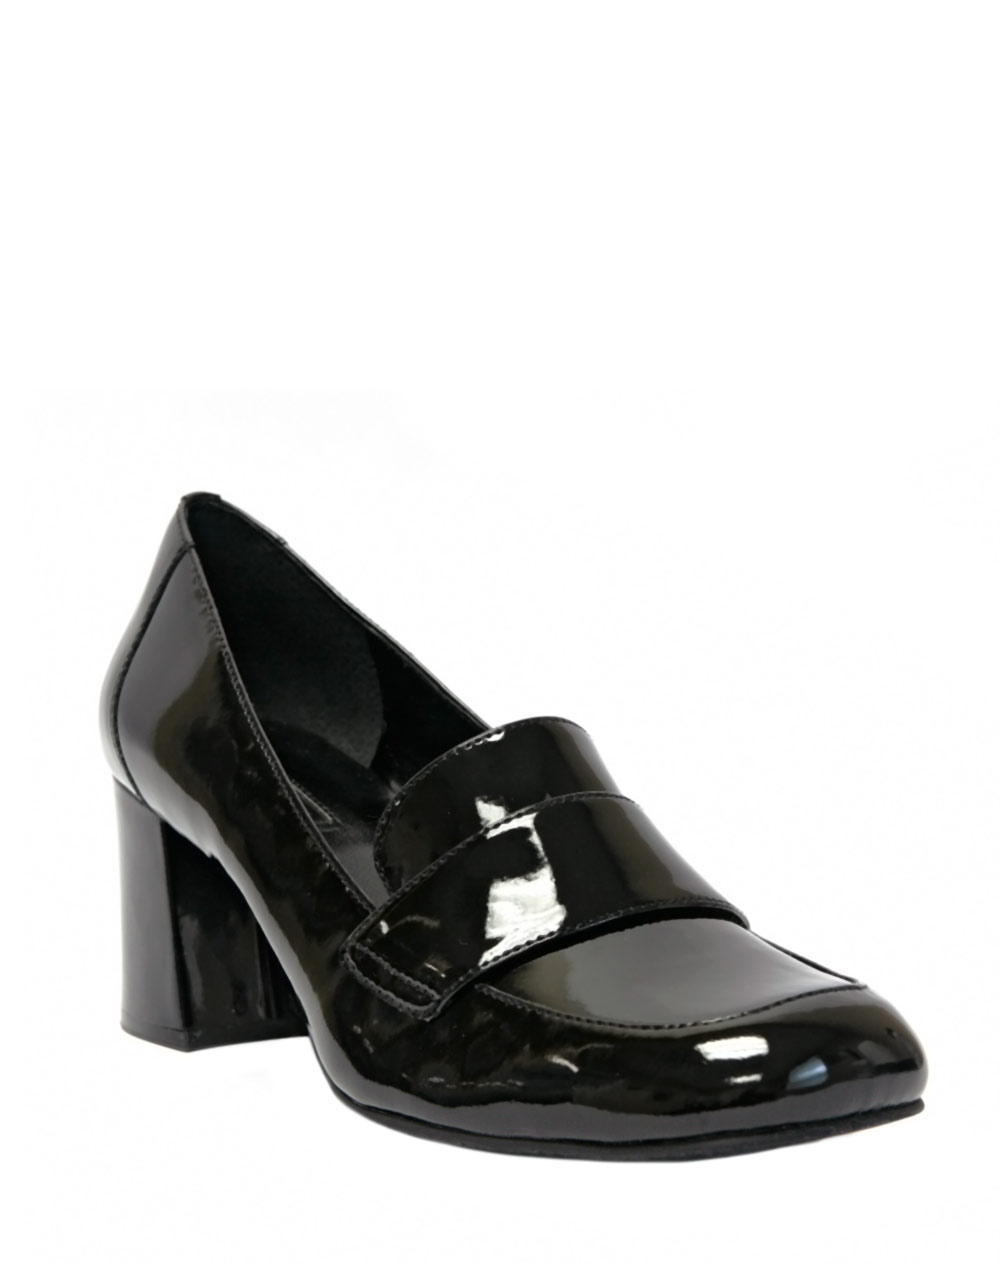 Tahari Lisa Black Patent Leather Loafers in Black (black patent) | Lyst